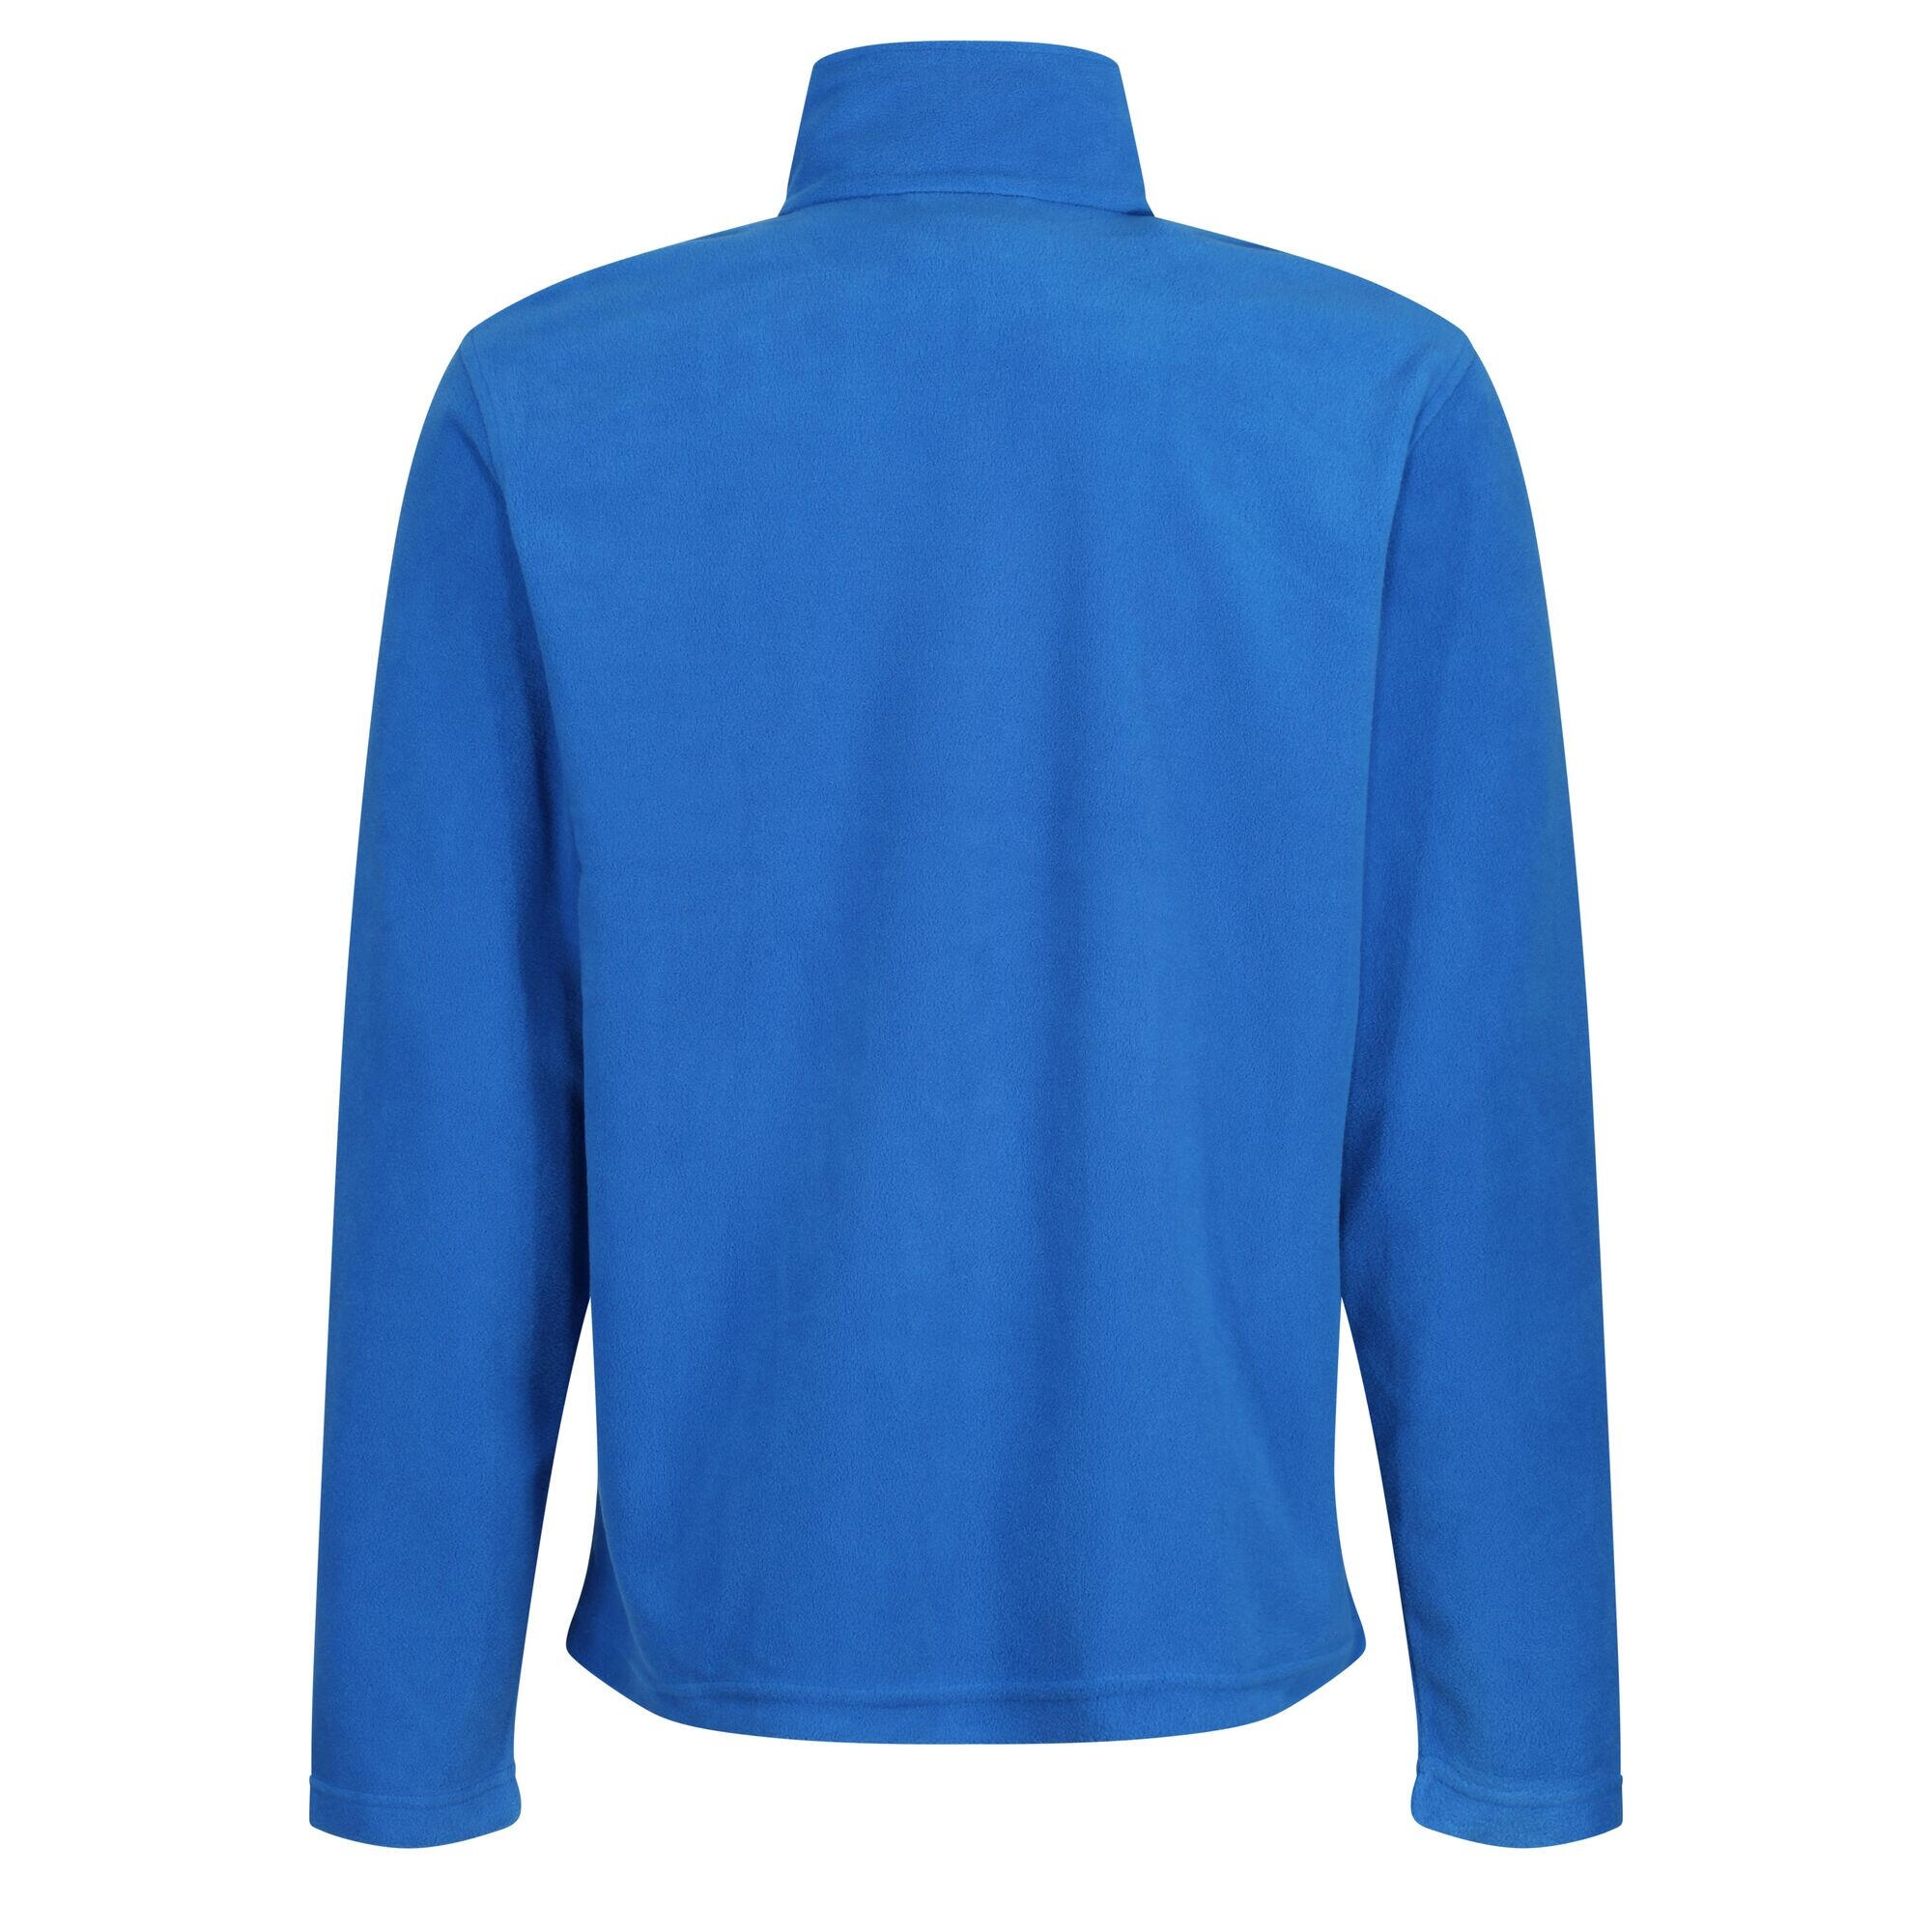 Mens 170 Series Antipill Zip Neck Micro Fleece (Royal Blue) 2/5